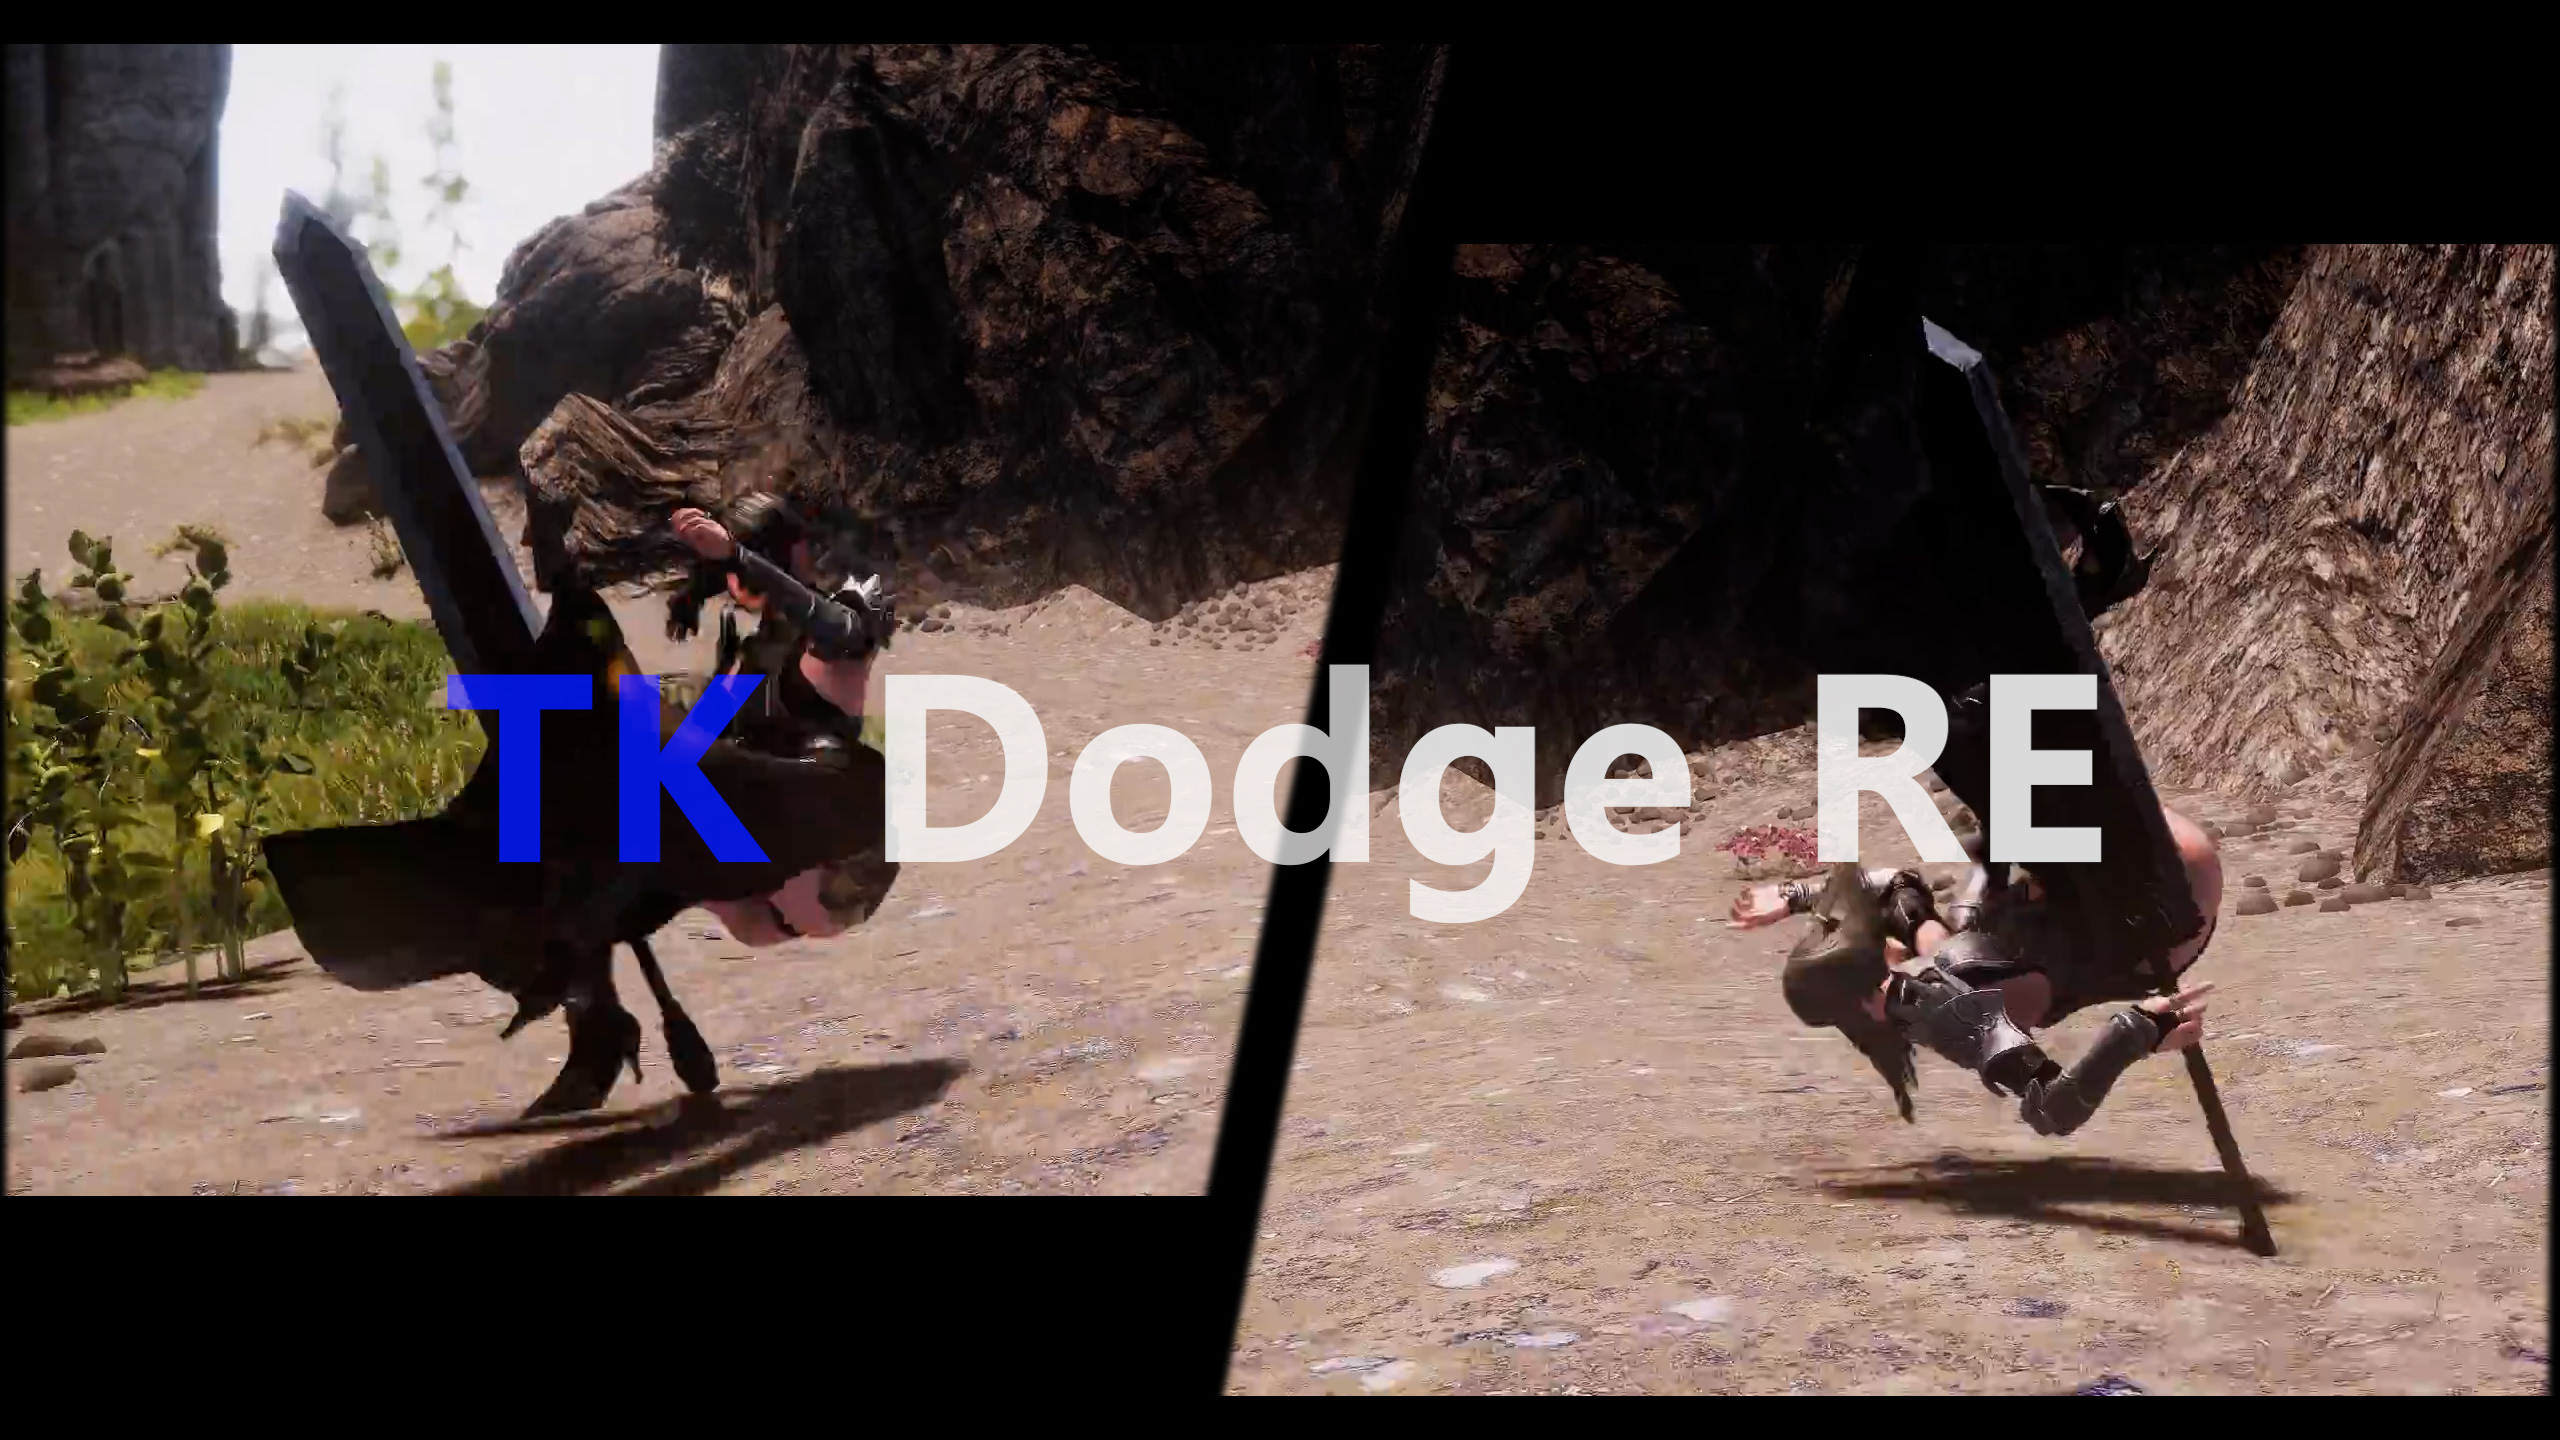 Tk dodge re written, game screenshot in the background